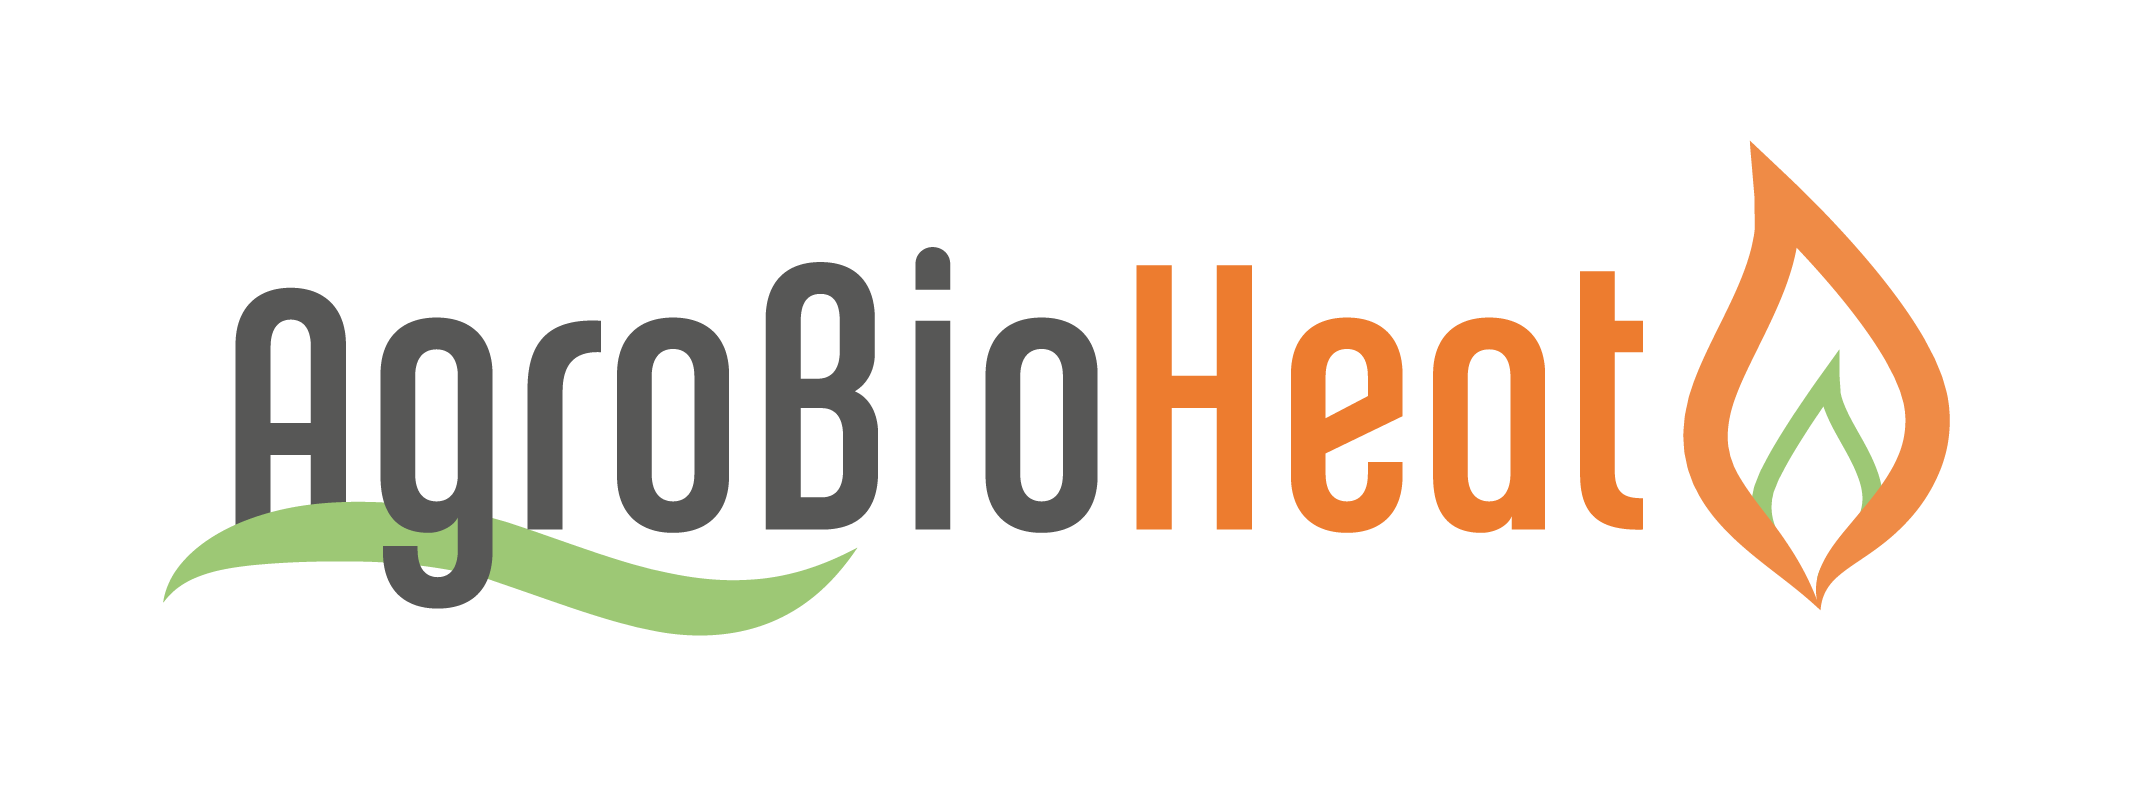 AgroBioHeat Logo